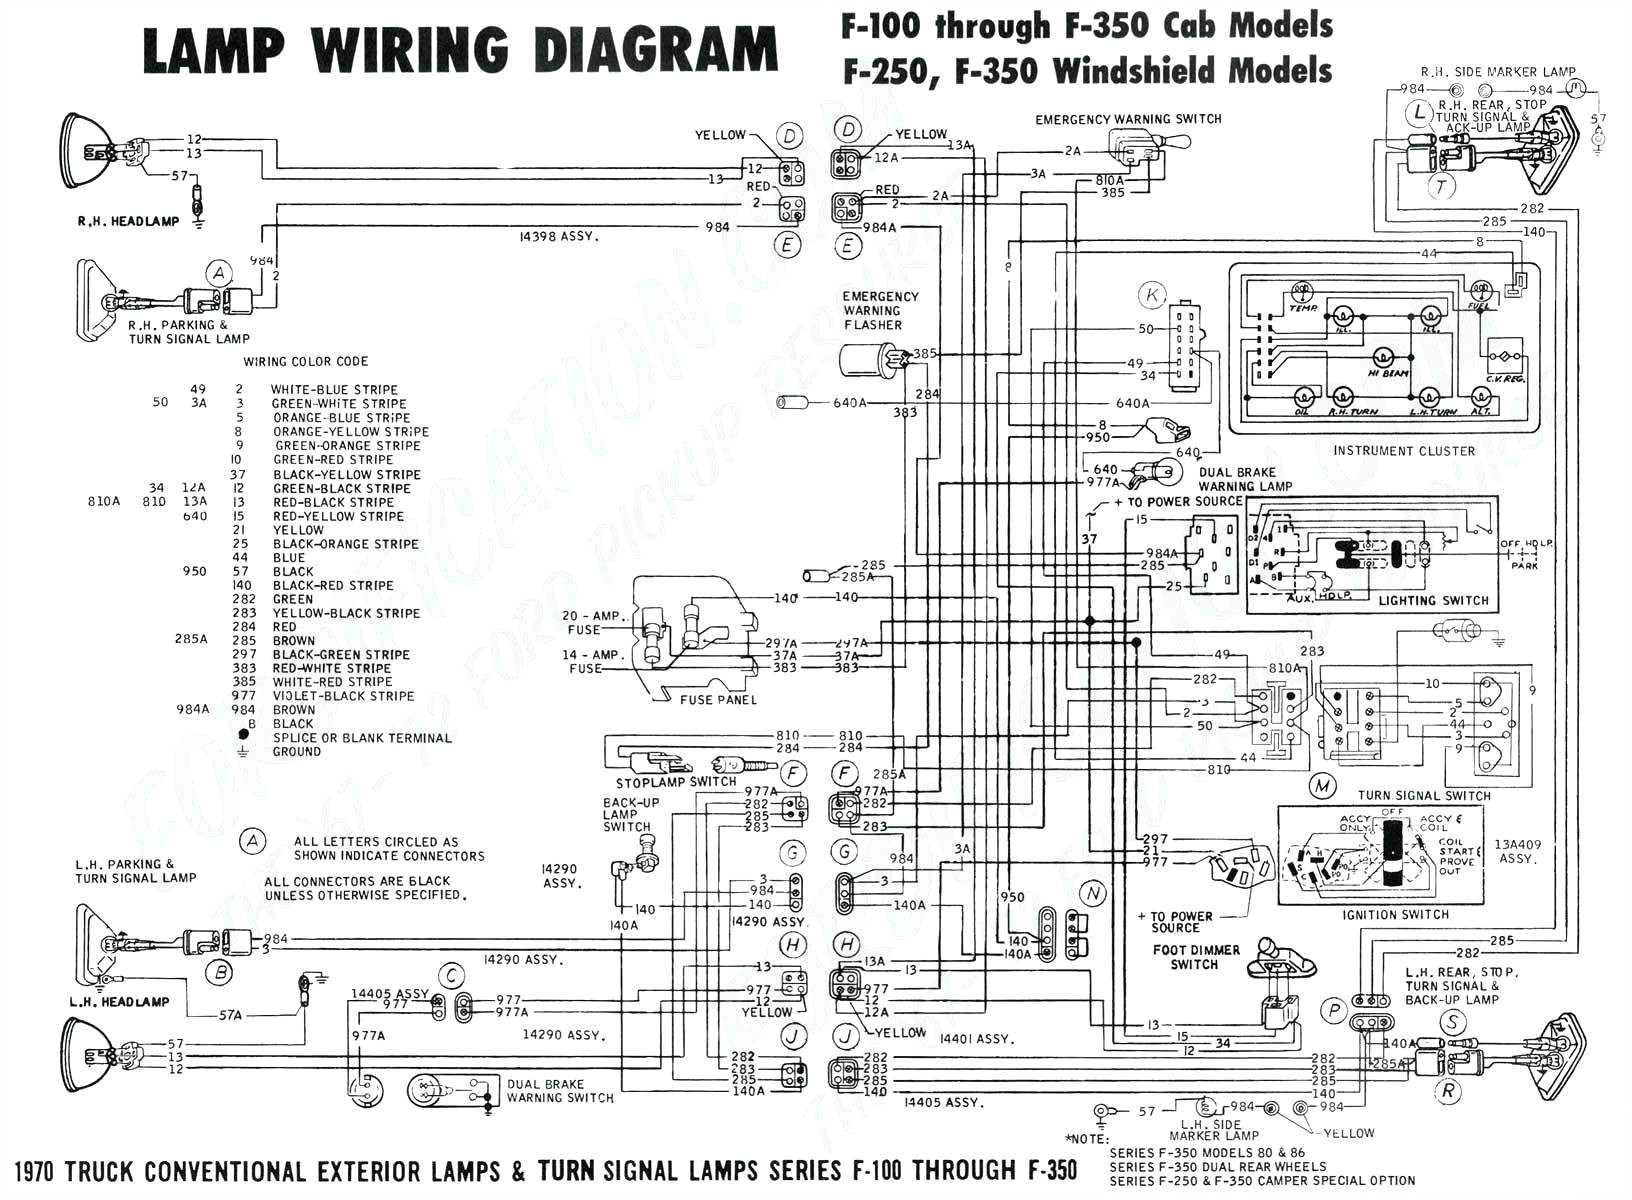 86 chevy starter wiring diagram 86 chevy truck wiring diagram unique wiring diagram remote starter refrence tail lights 55 6281 jpg